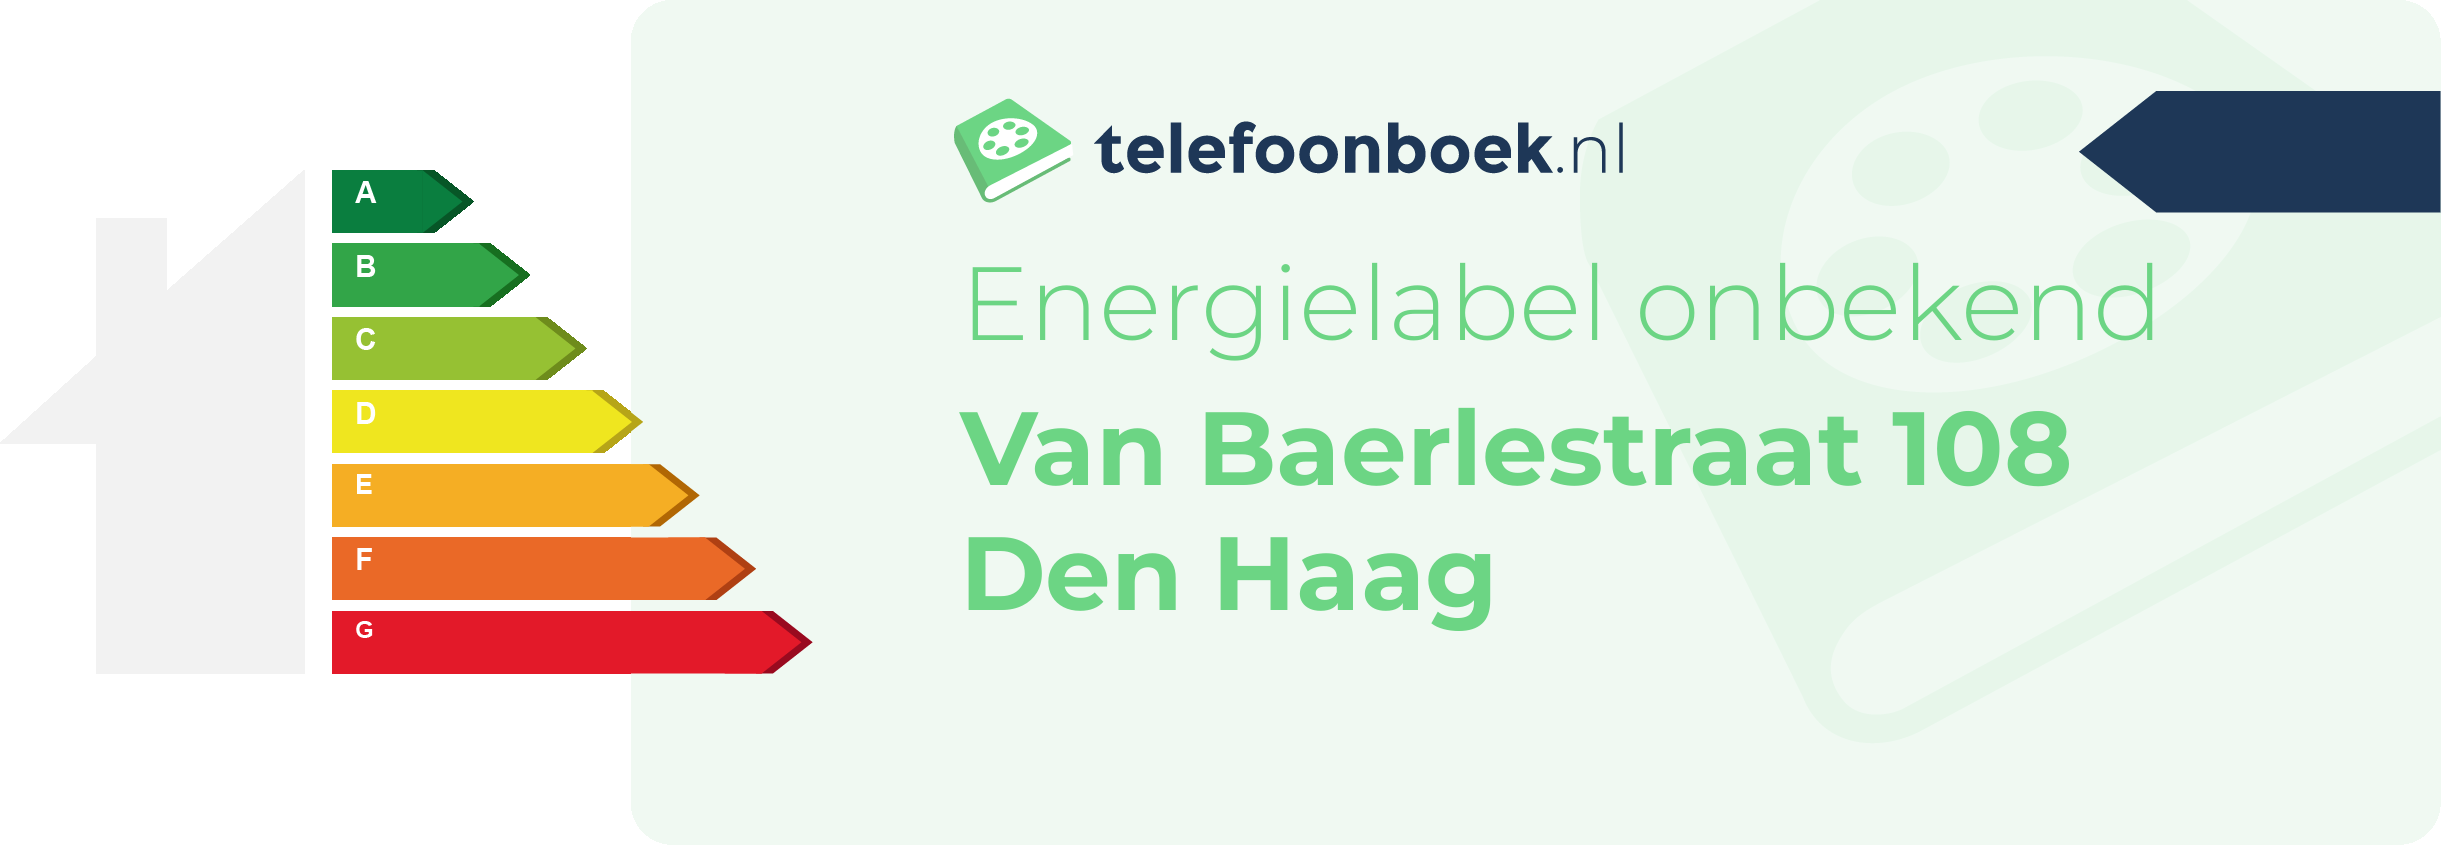 Energielabel Van Baerlestraat 108 Den Haag